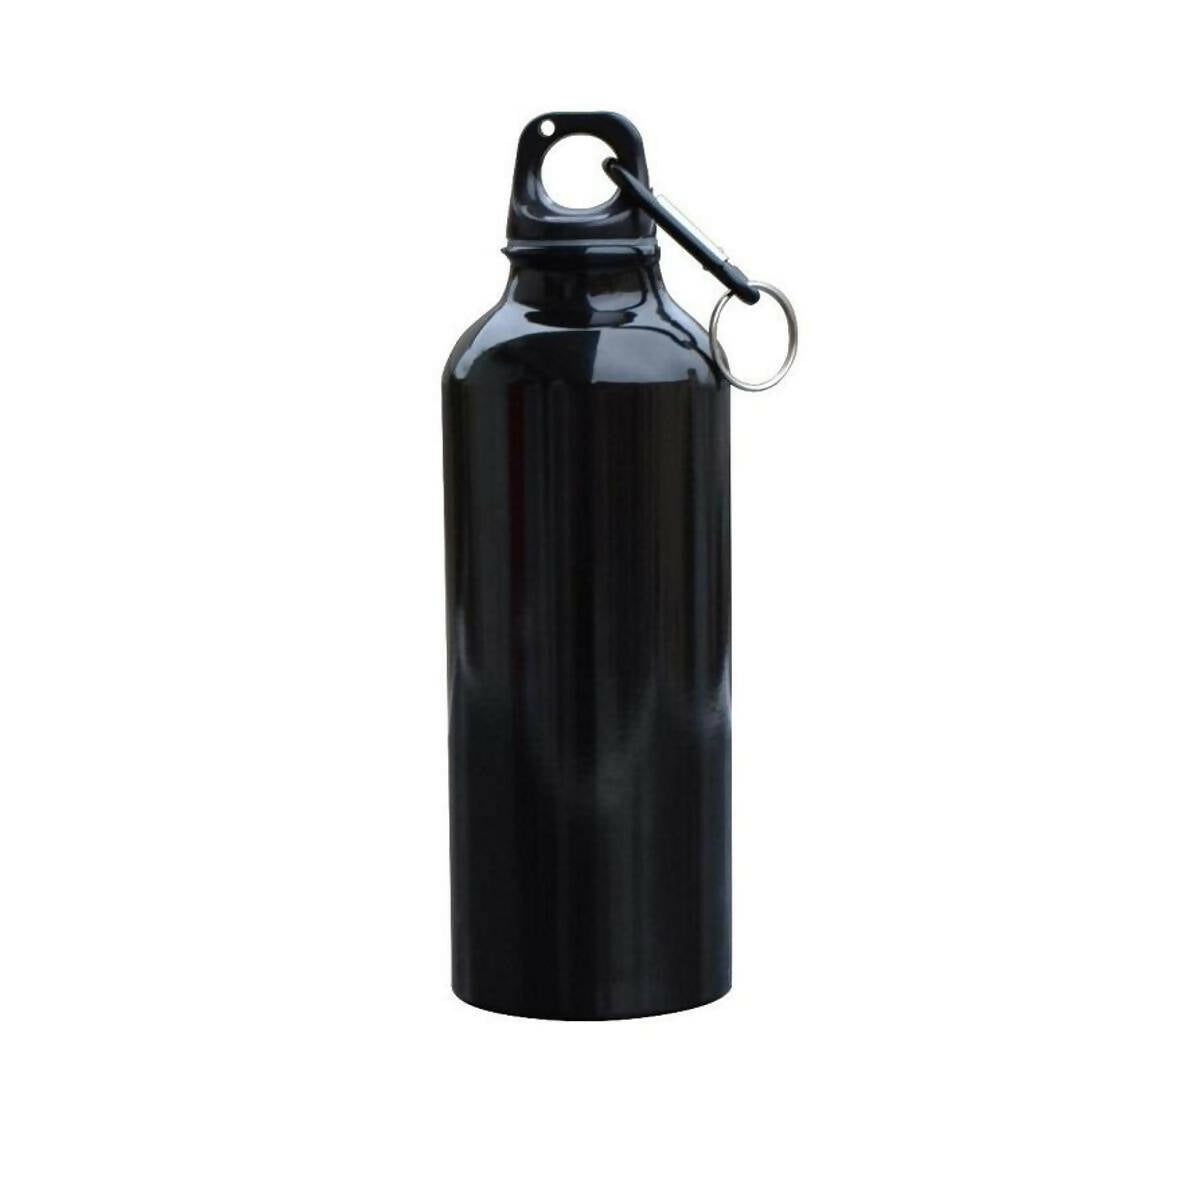 500ml Lightweight Stainless Steel Wide Mouth Drinking Water Bottle - Black